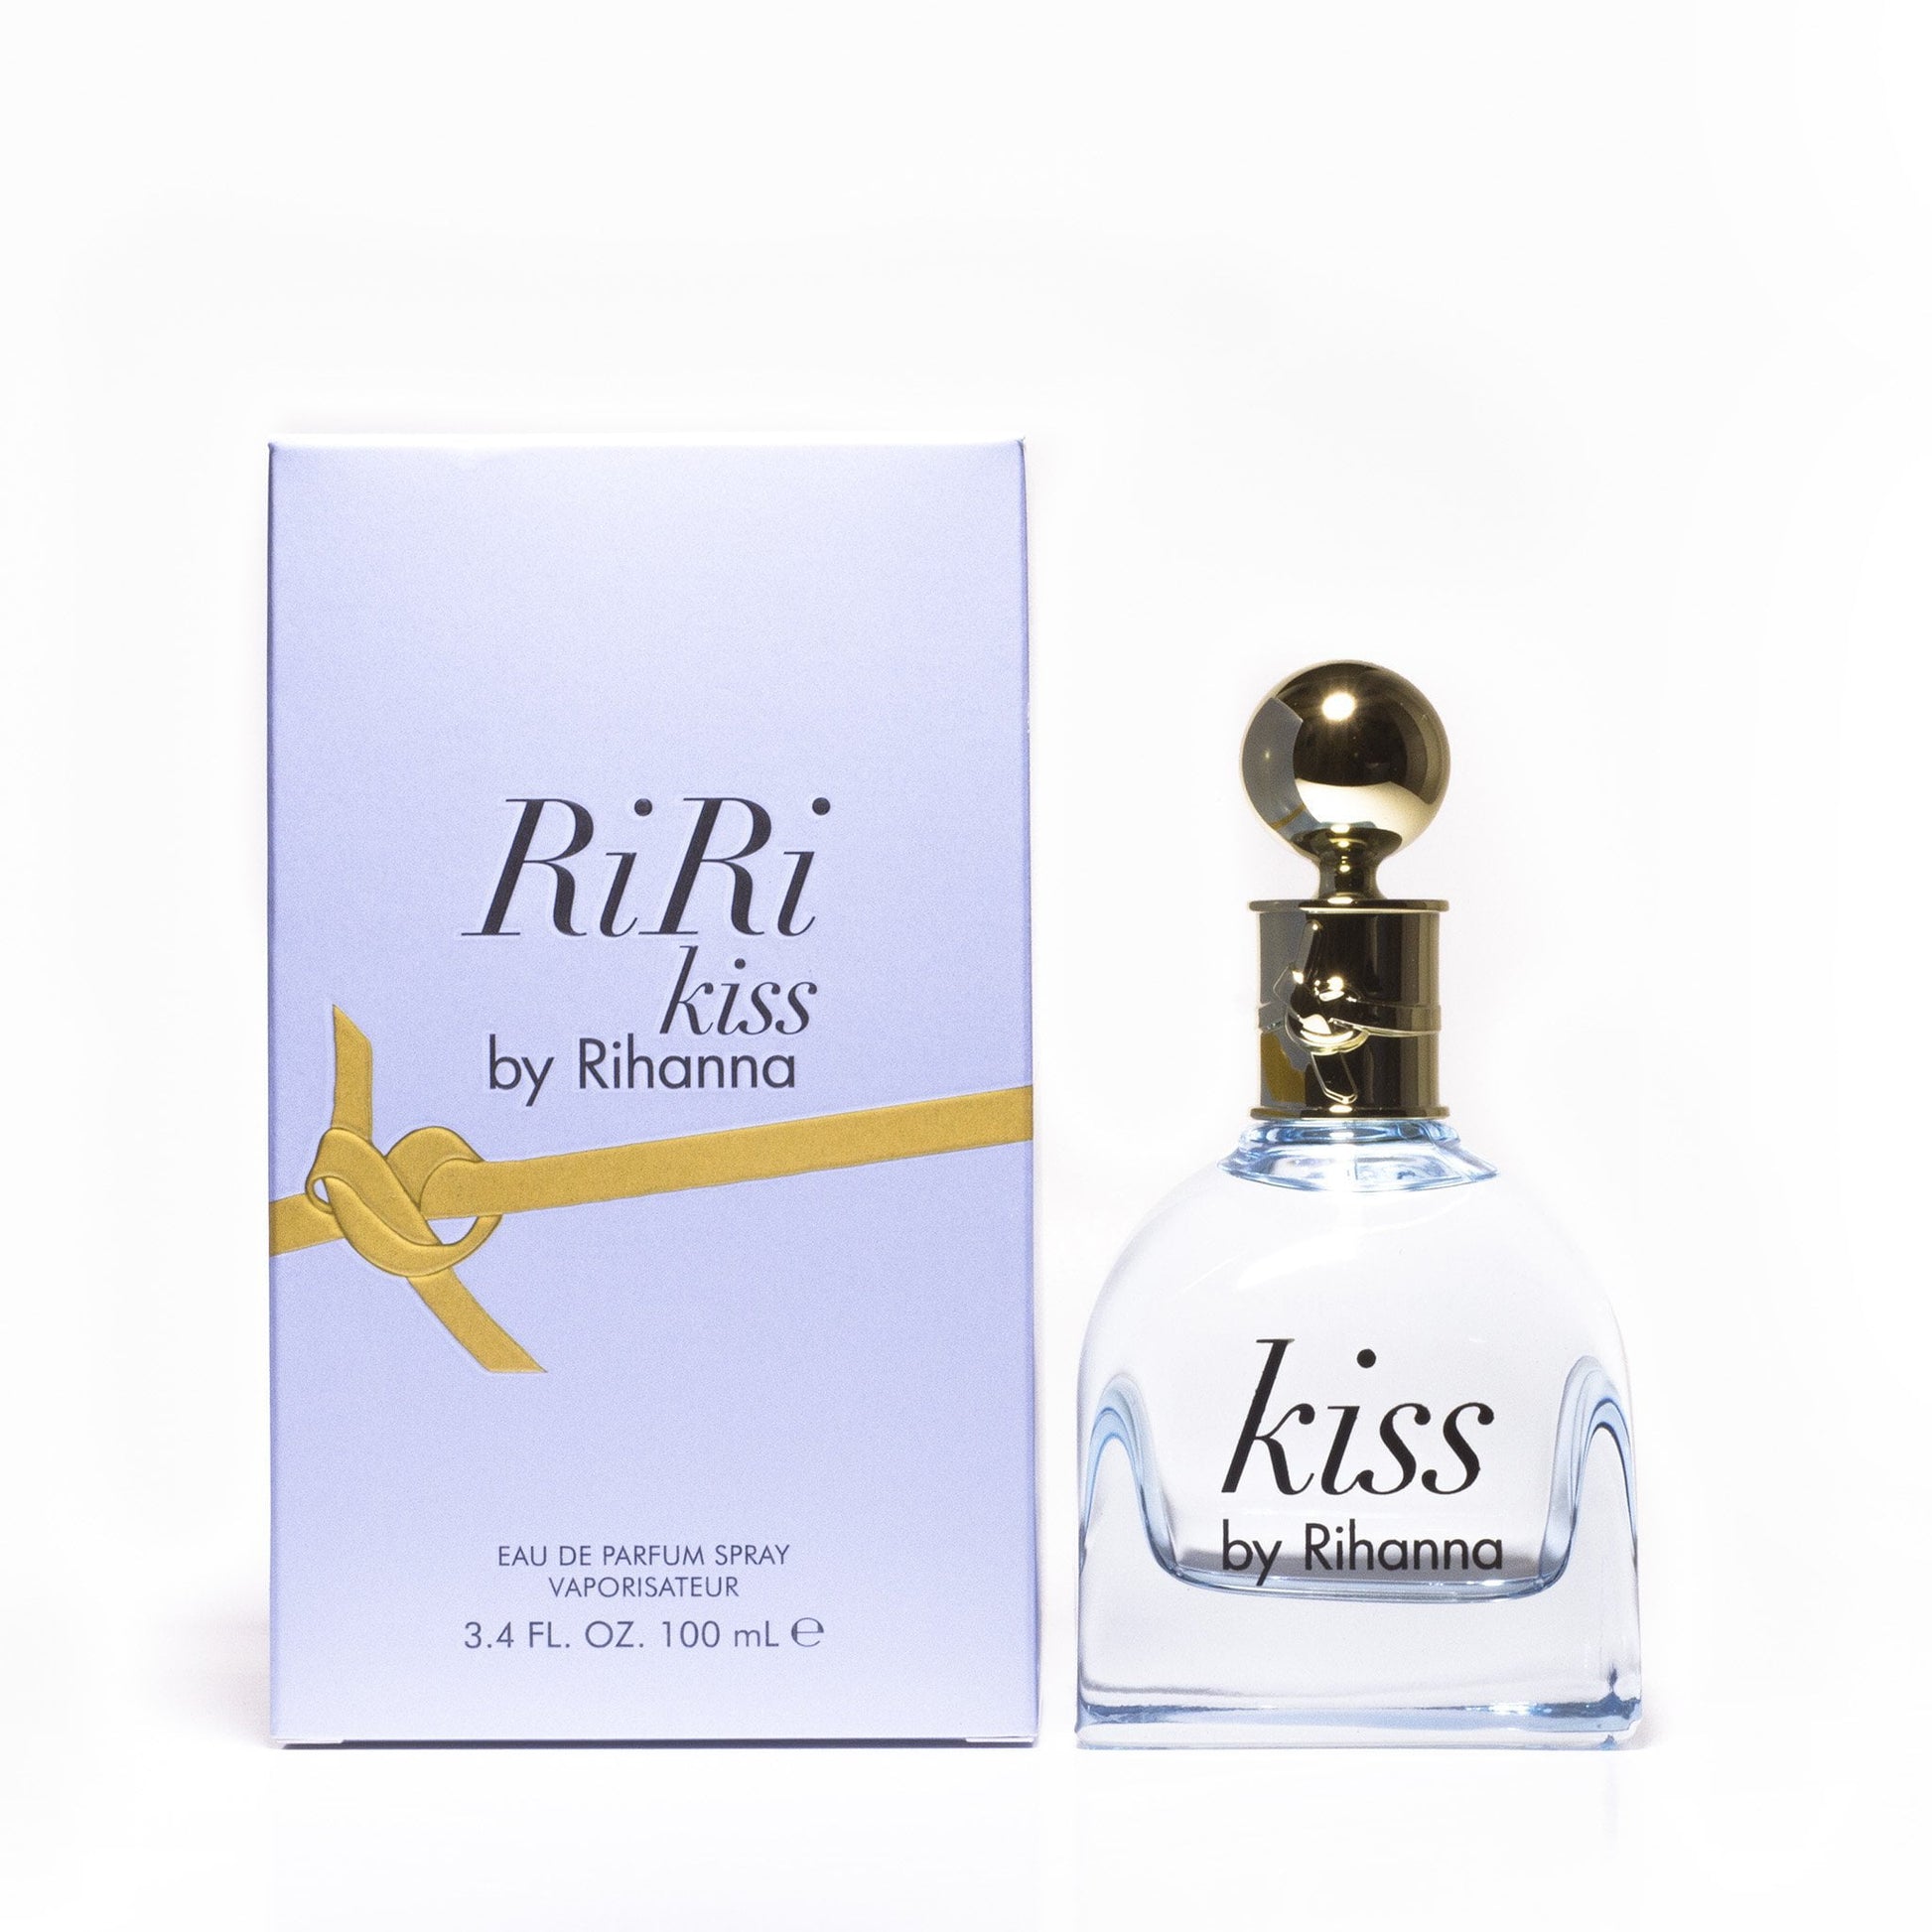 Ri Ri Kiss Eau de Parfum Spray for Women by Rihanna, Product image 1